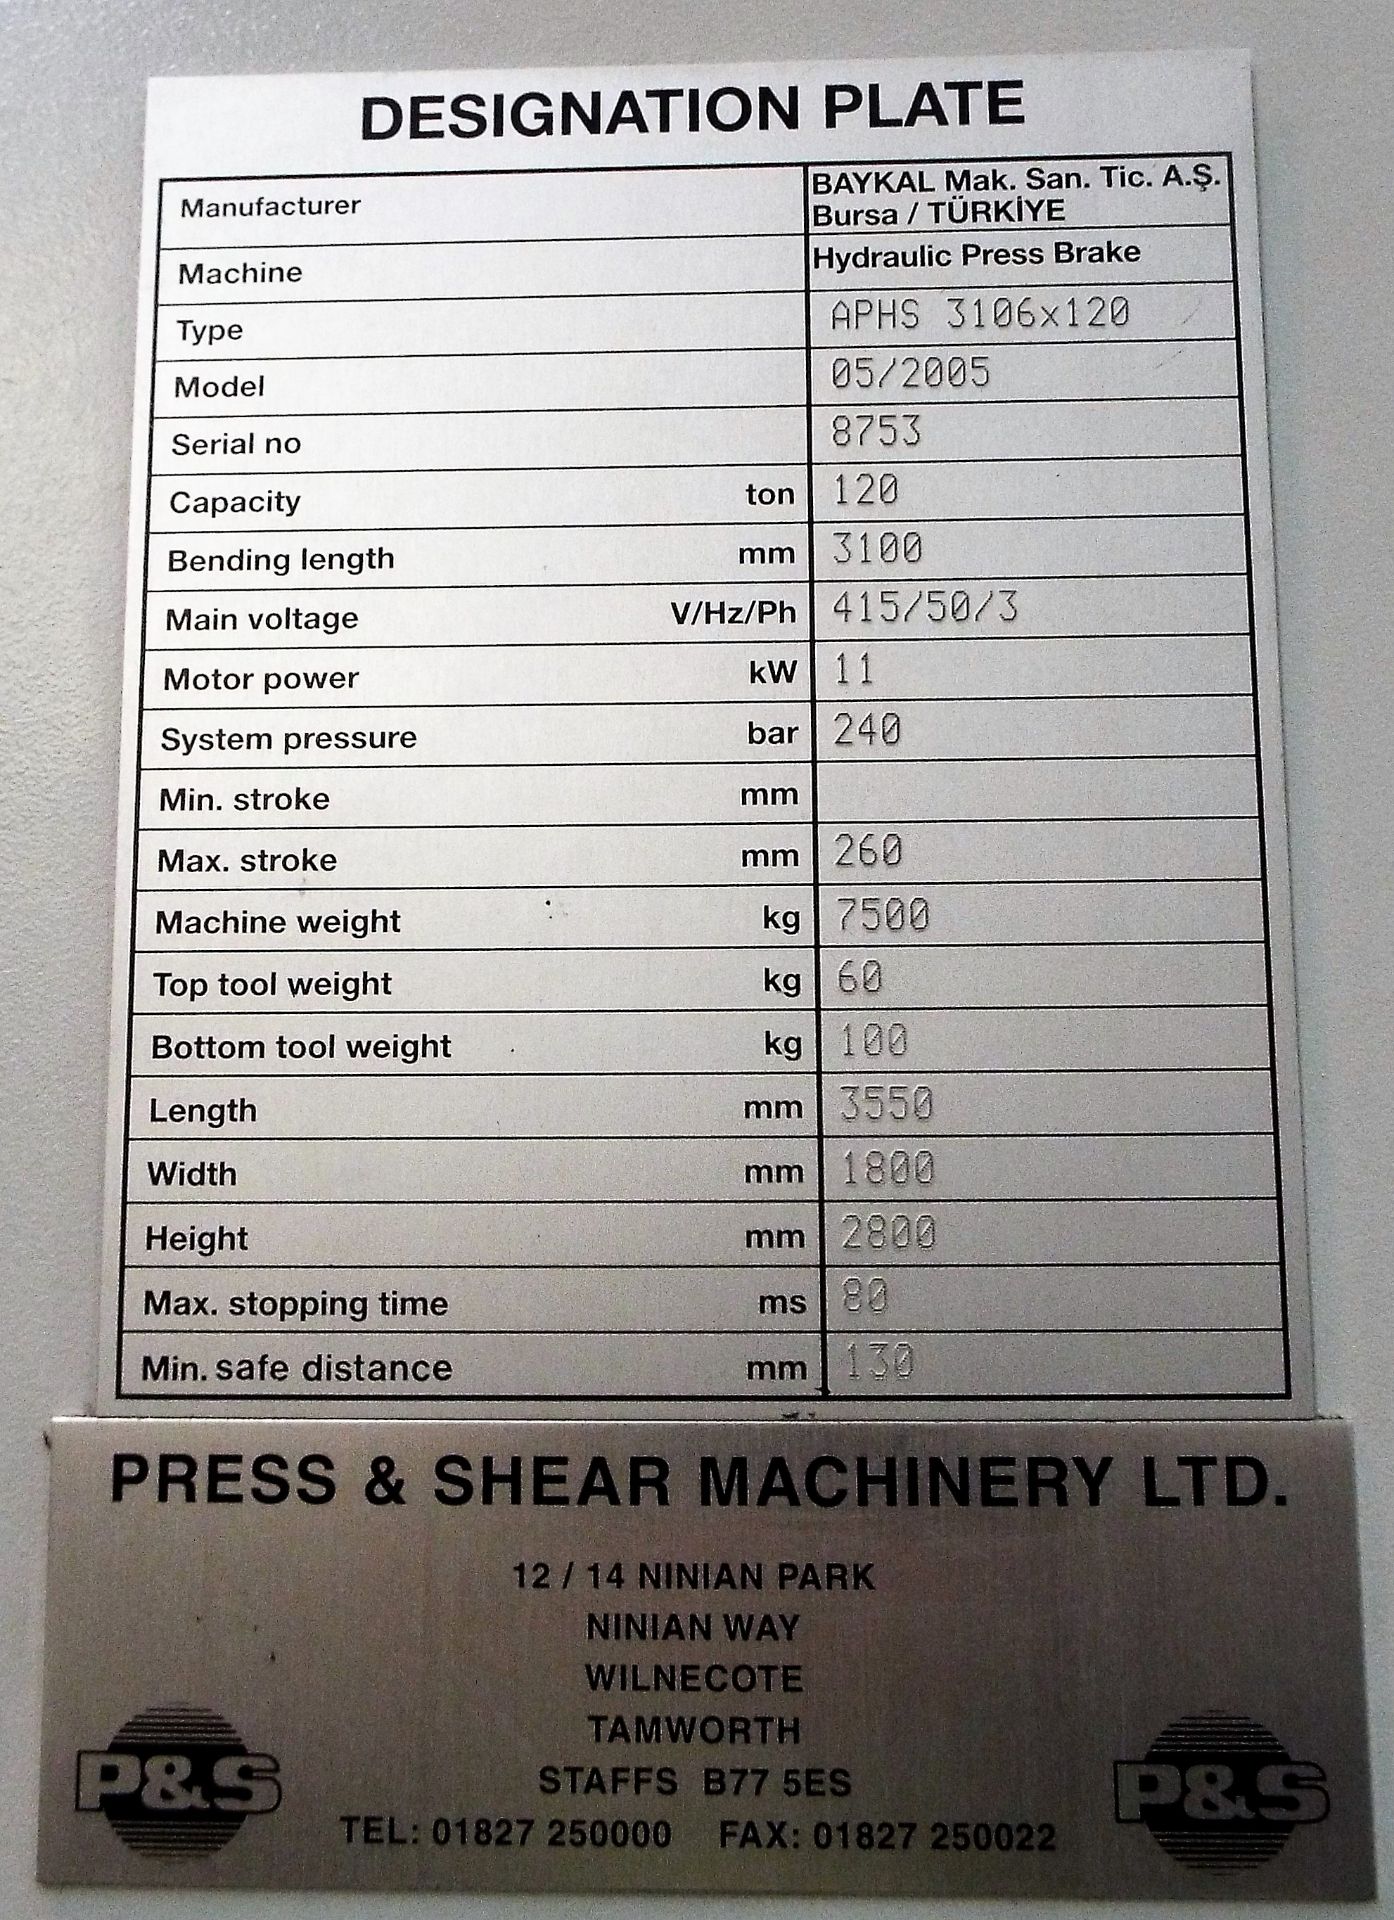 Baykal APHS 3106 x 120 CNC Hydraulic Brake Press - Image 7 of 24